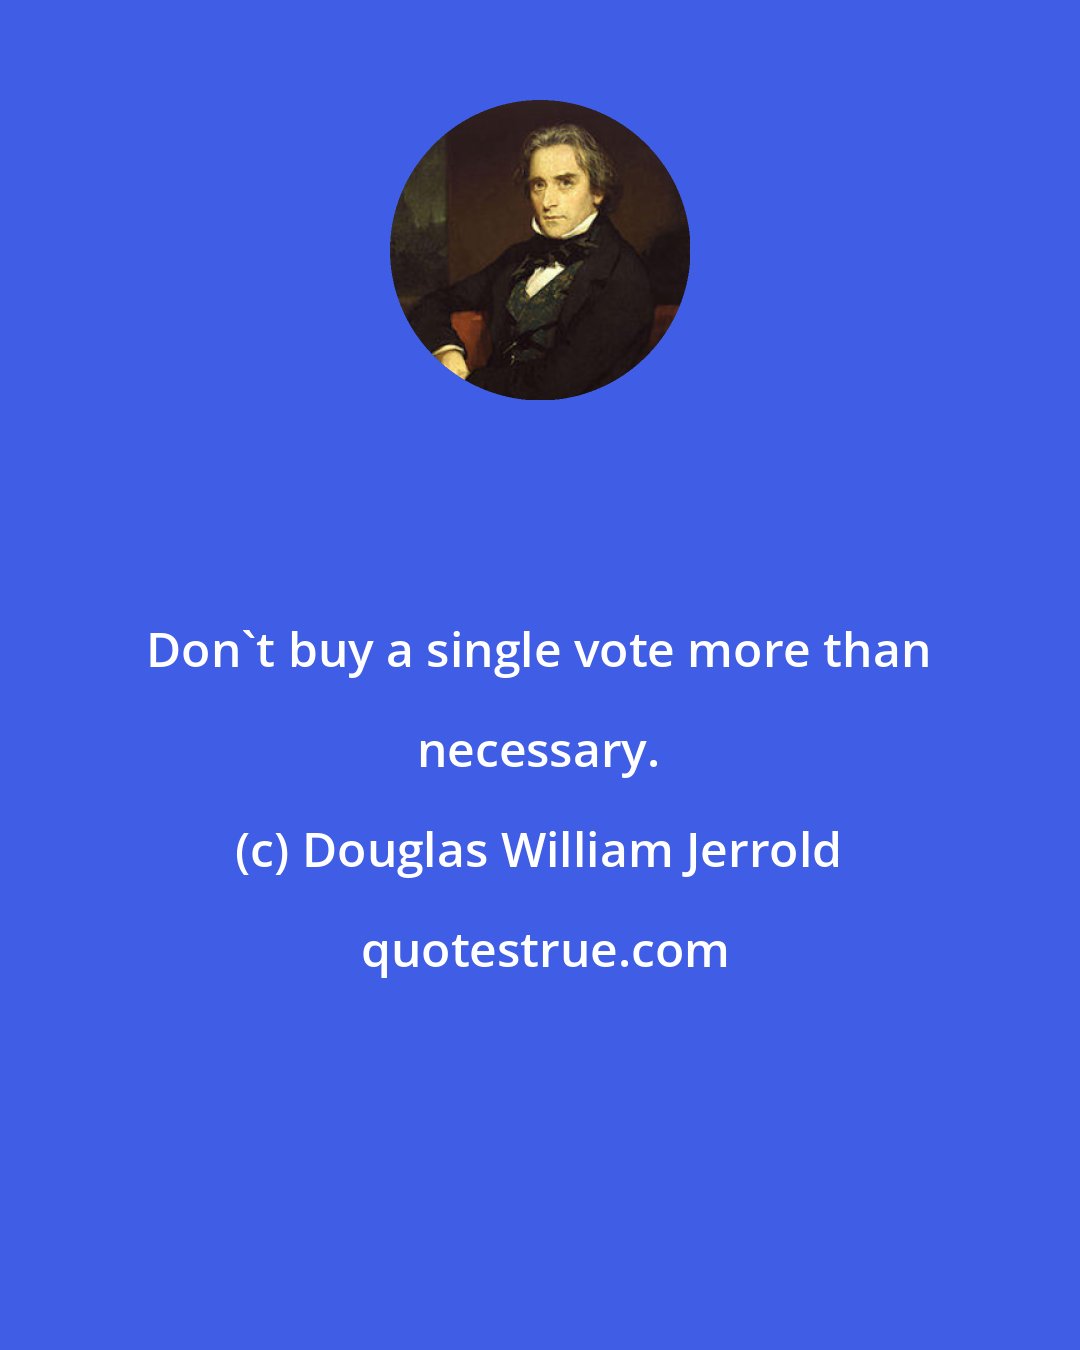 Douglas William Jerrold: Don't buy a single vote more than necessary.